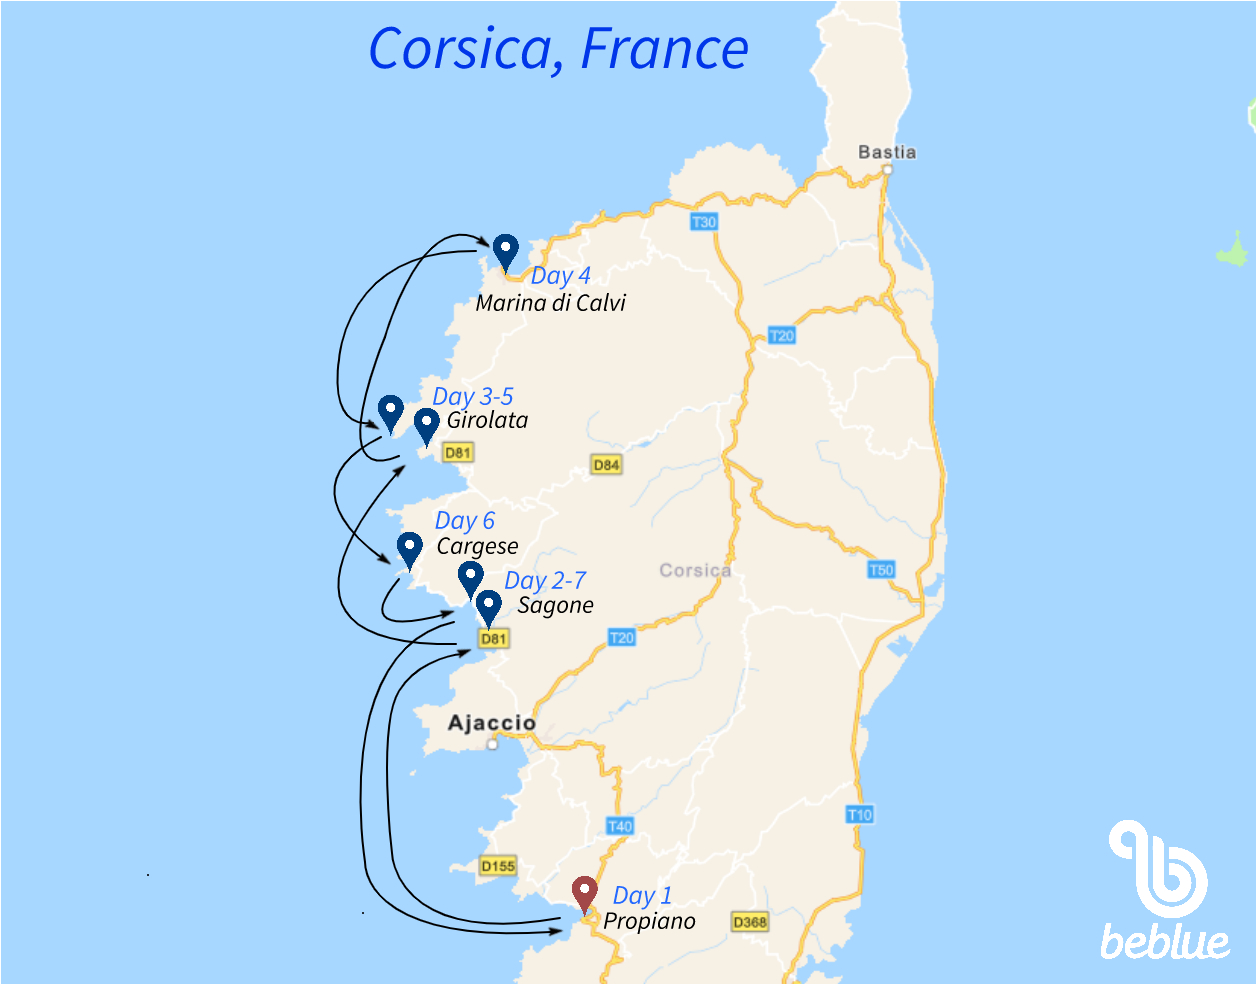 France: Corsica